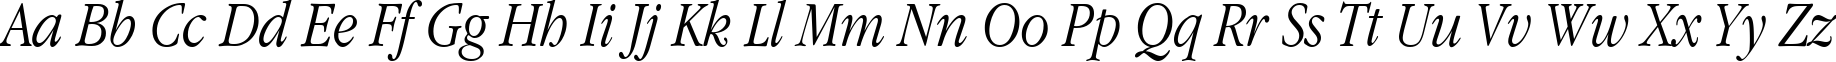 Пример написания английского алфавита шрифтом Garamond Narrow Italic:1 Oct 1991